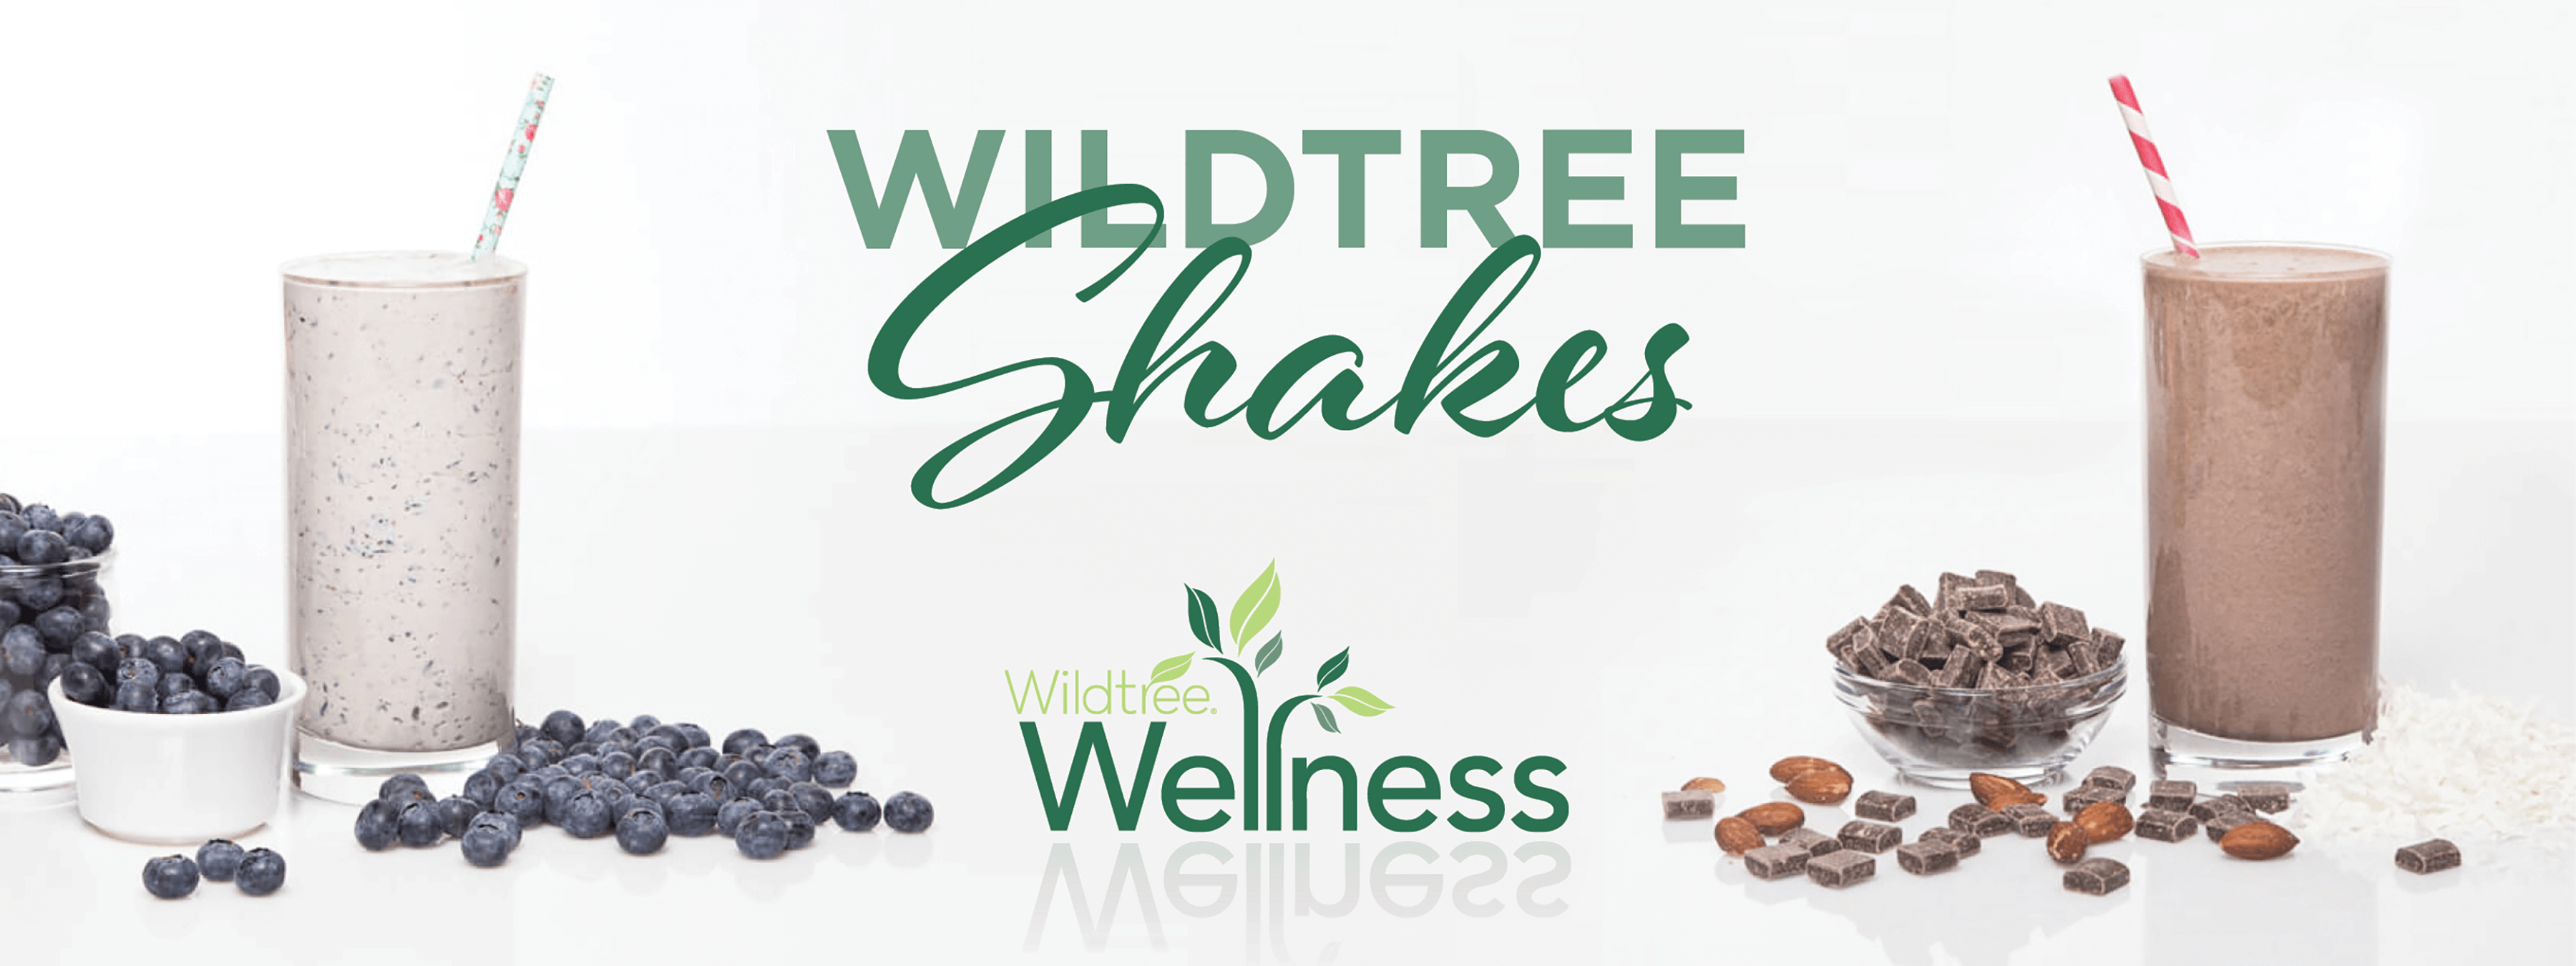 Wildtree Wellness